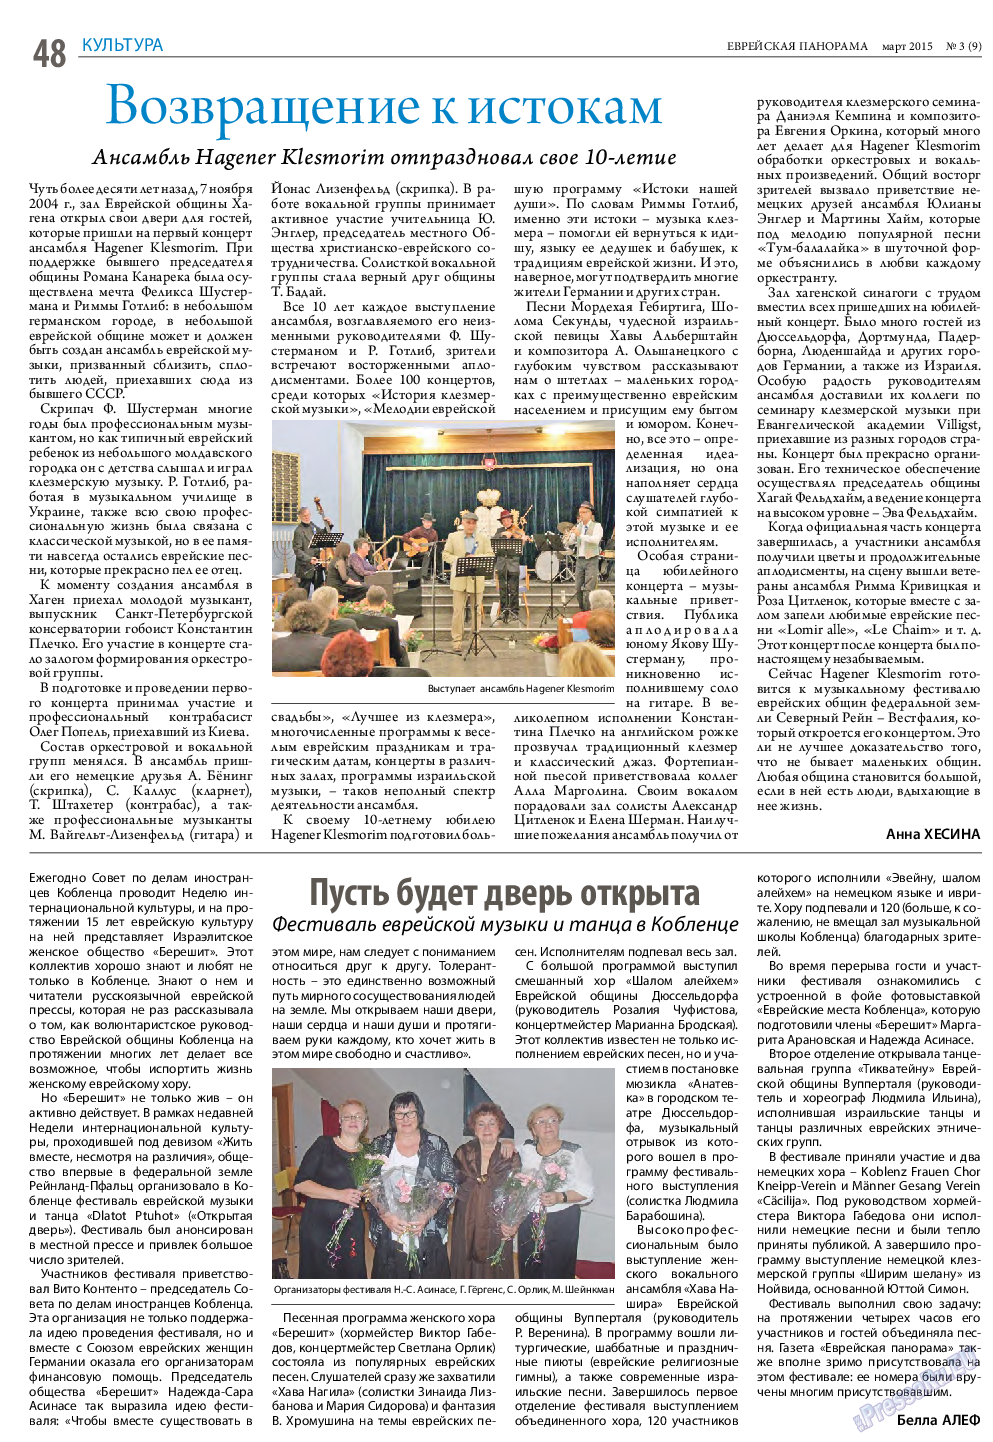 Еврейская панорама, газета. 2015 №3 стр.48